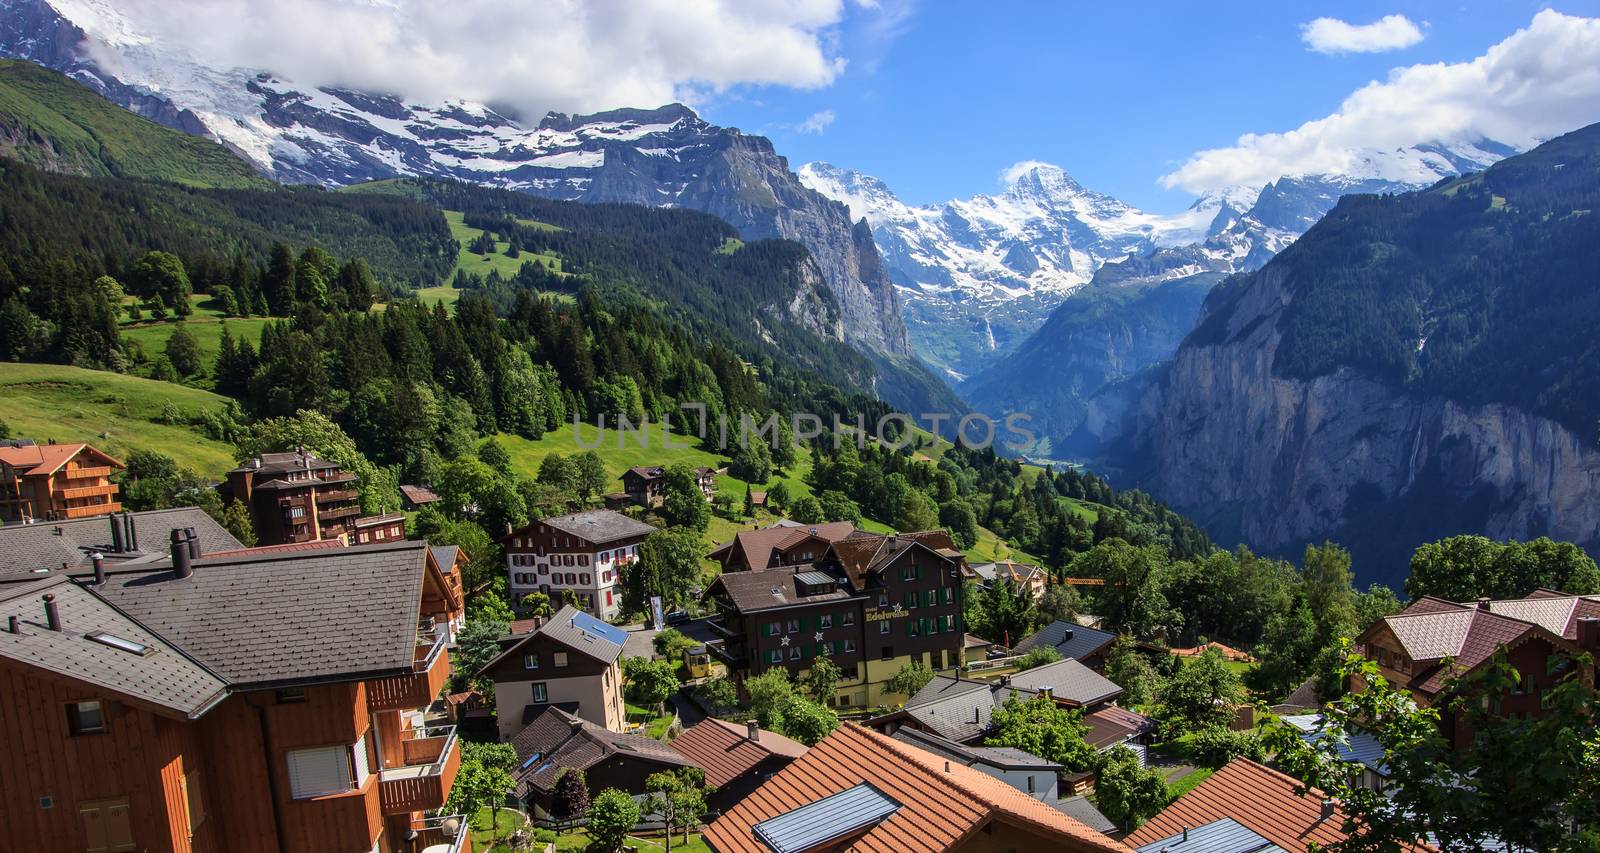 View of Wengen town, Jungfrau and Lauterbrunnen valley, Switzerland by victorflowerfly